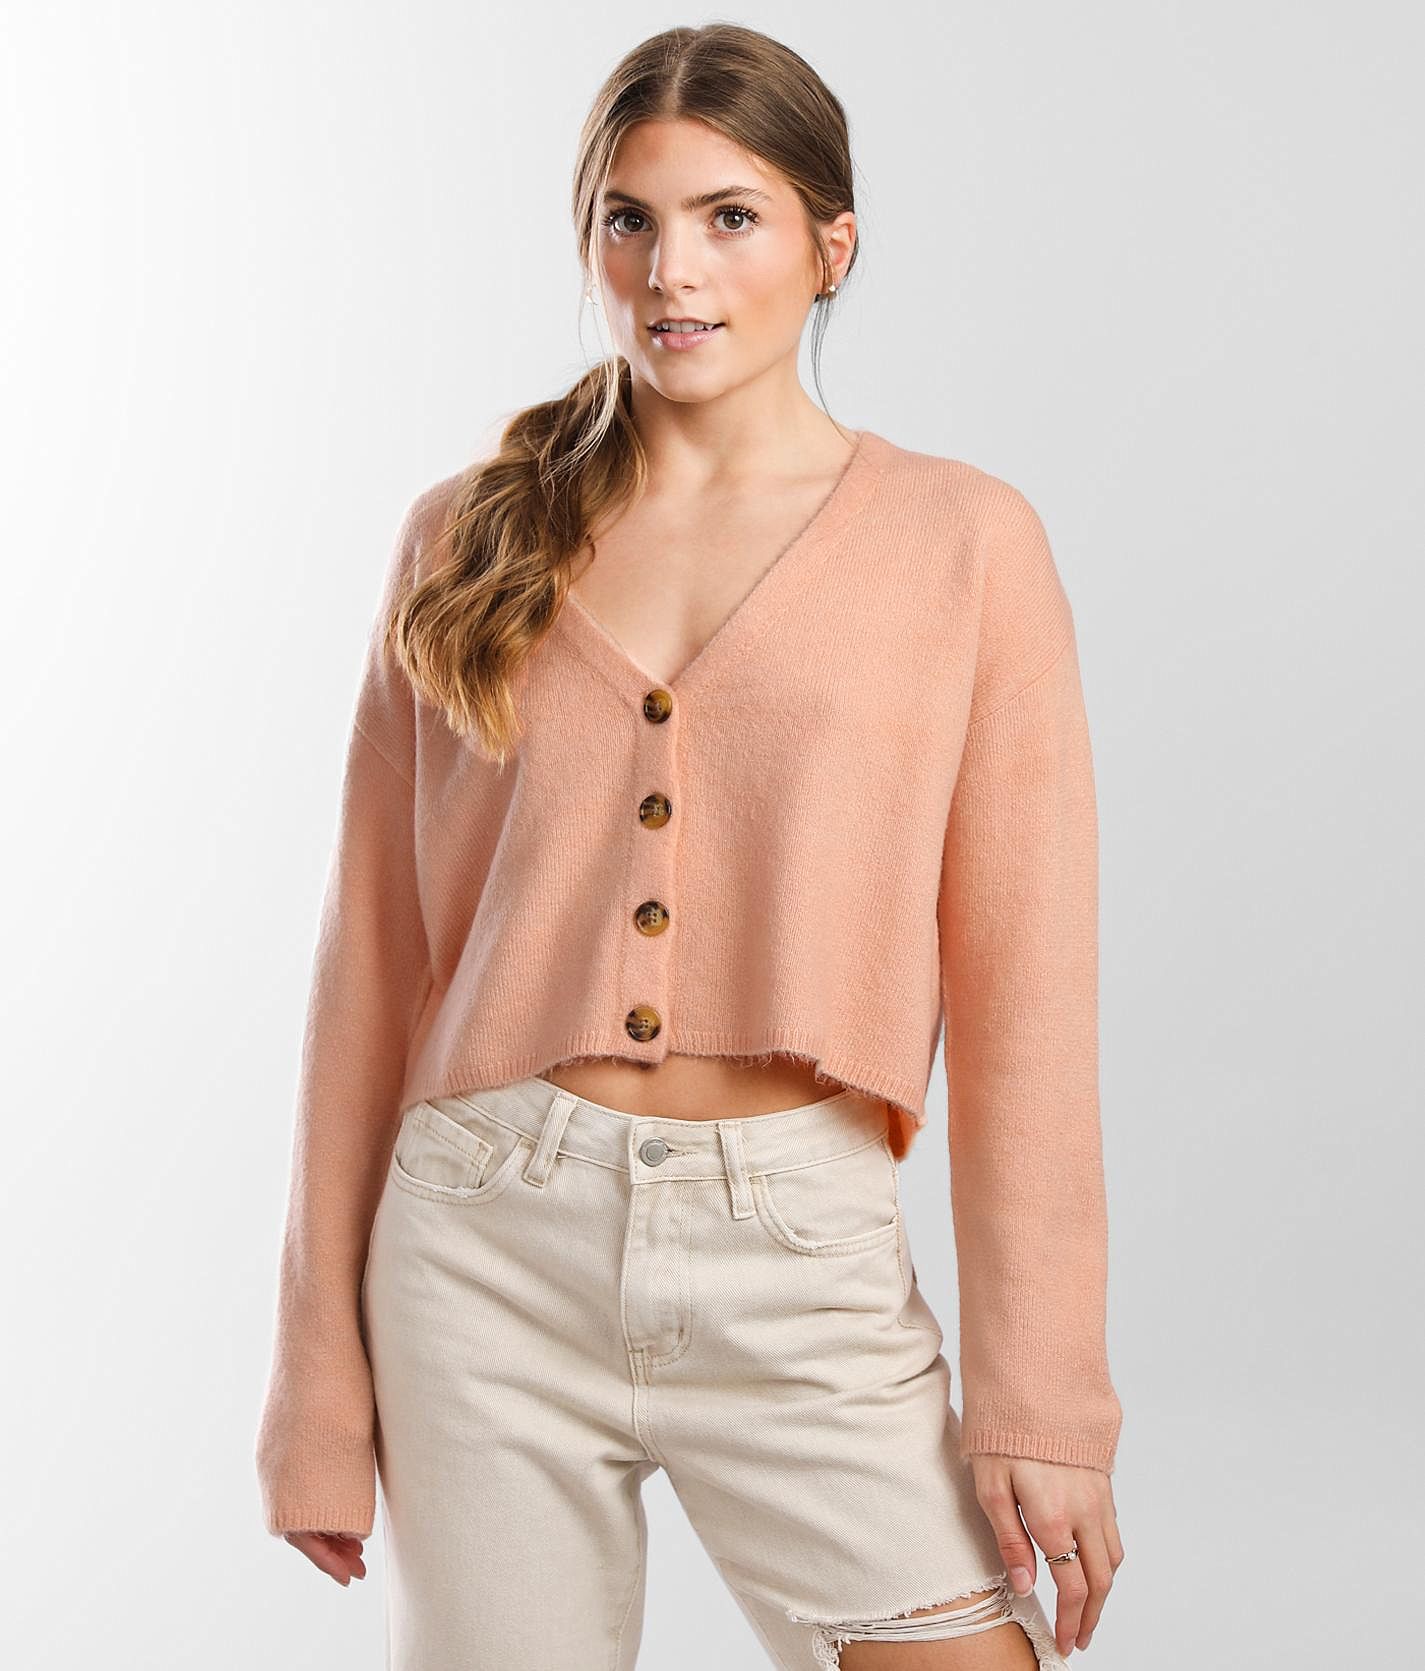 Billabong Short N Sweet Cropped Cardigan Sweater - Women's